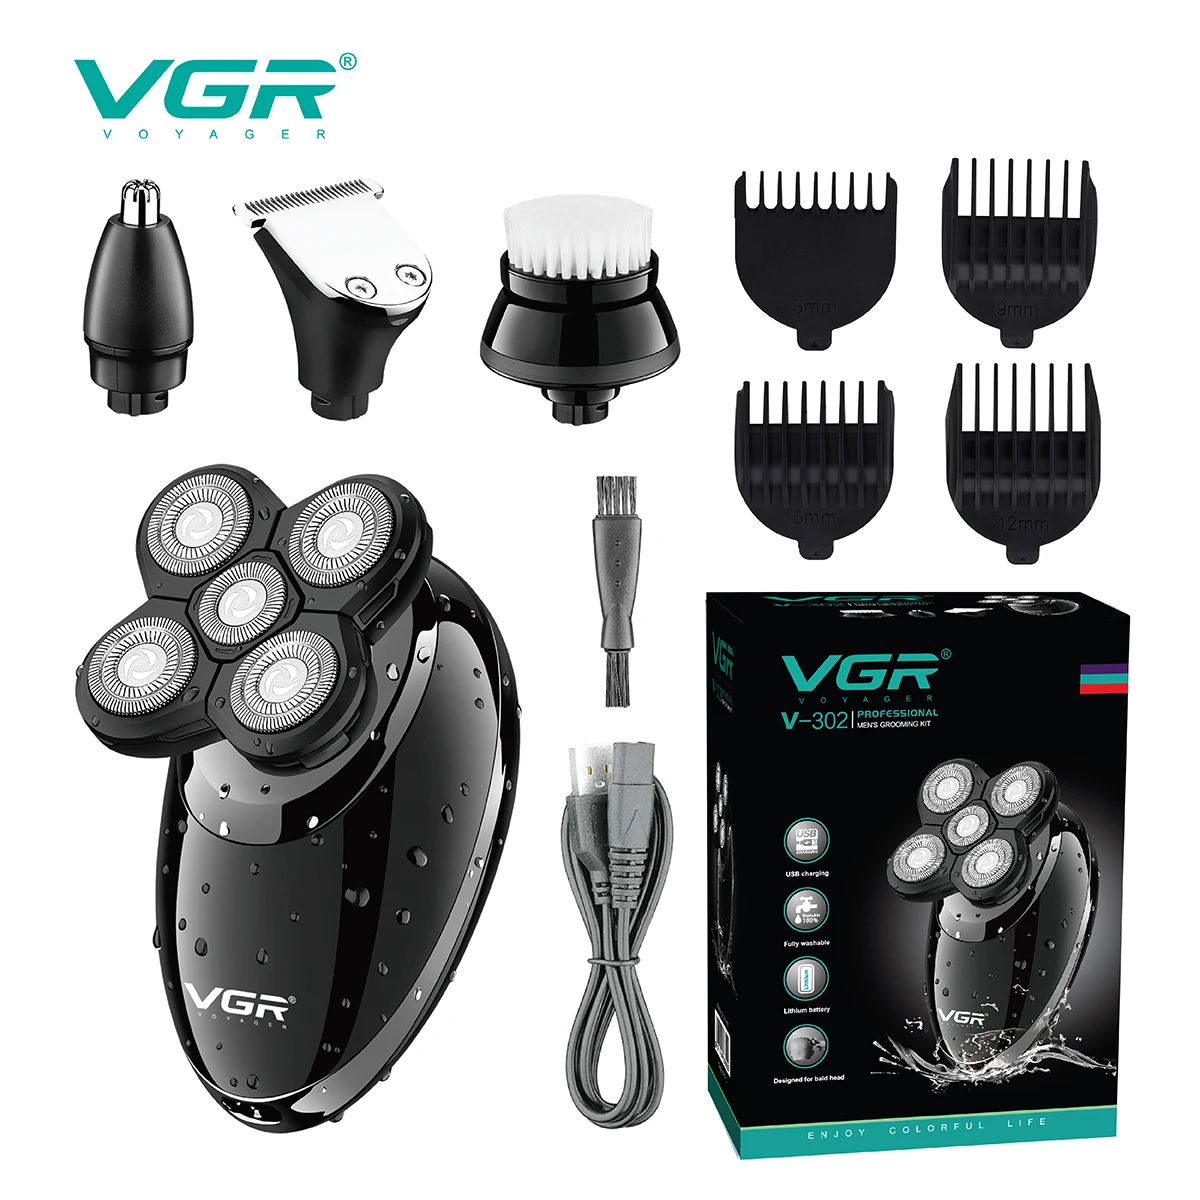 

VGR V-302 4 in 1 men grooming kit waterproof rechargeable beard shaver razor nose trimmer rotary electric shavers for men